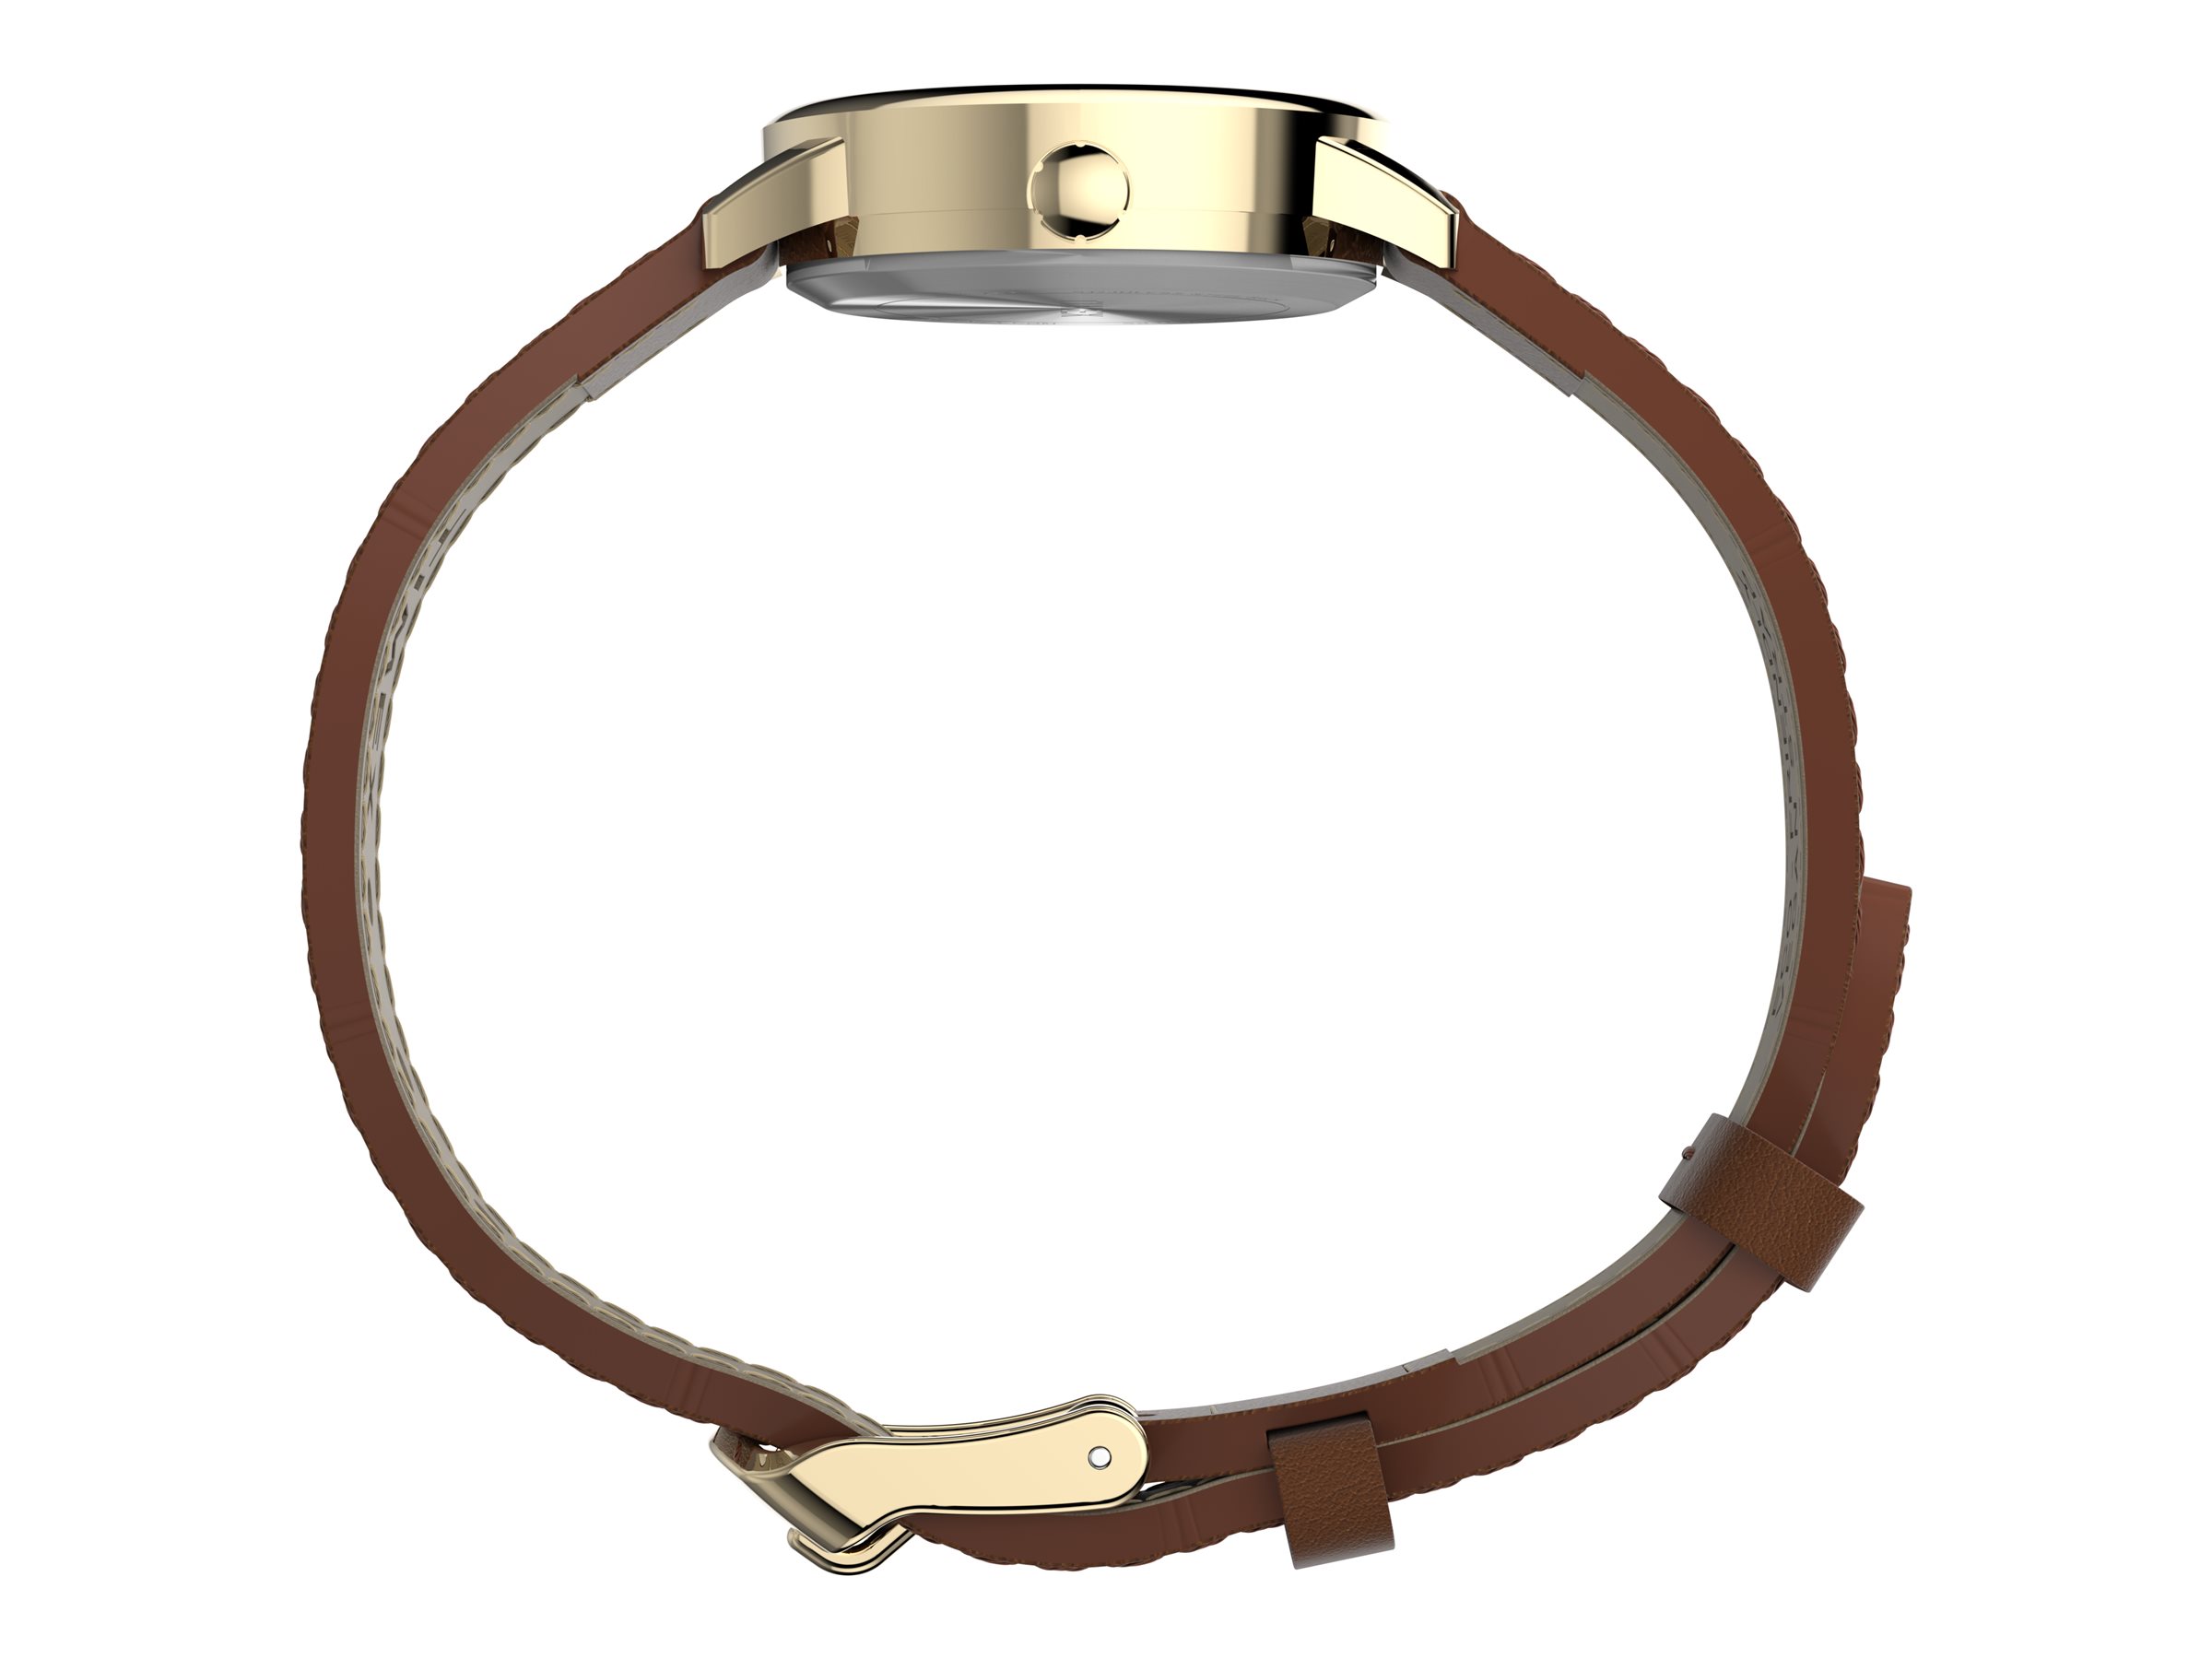 Timex Easy Reader Wristwatch - Brown/Gold - TW2V754009J